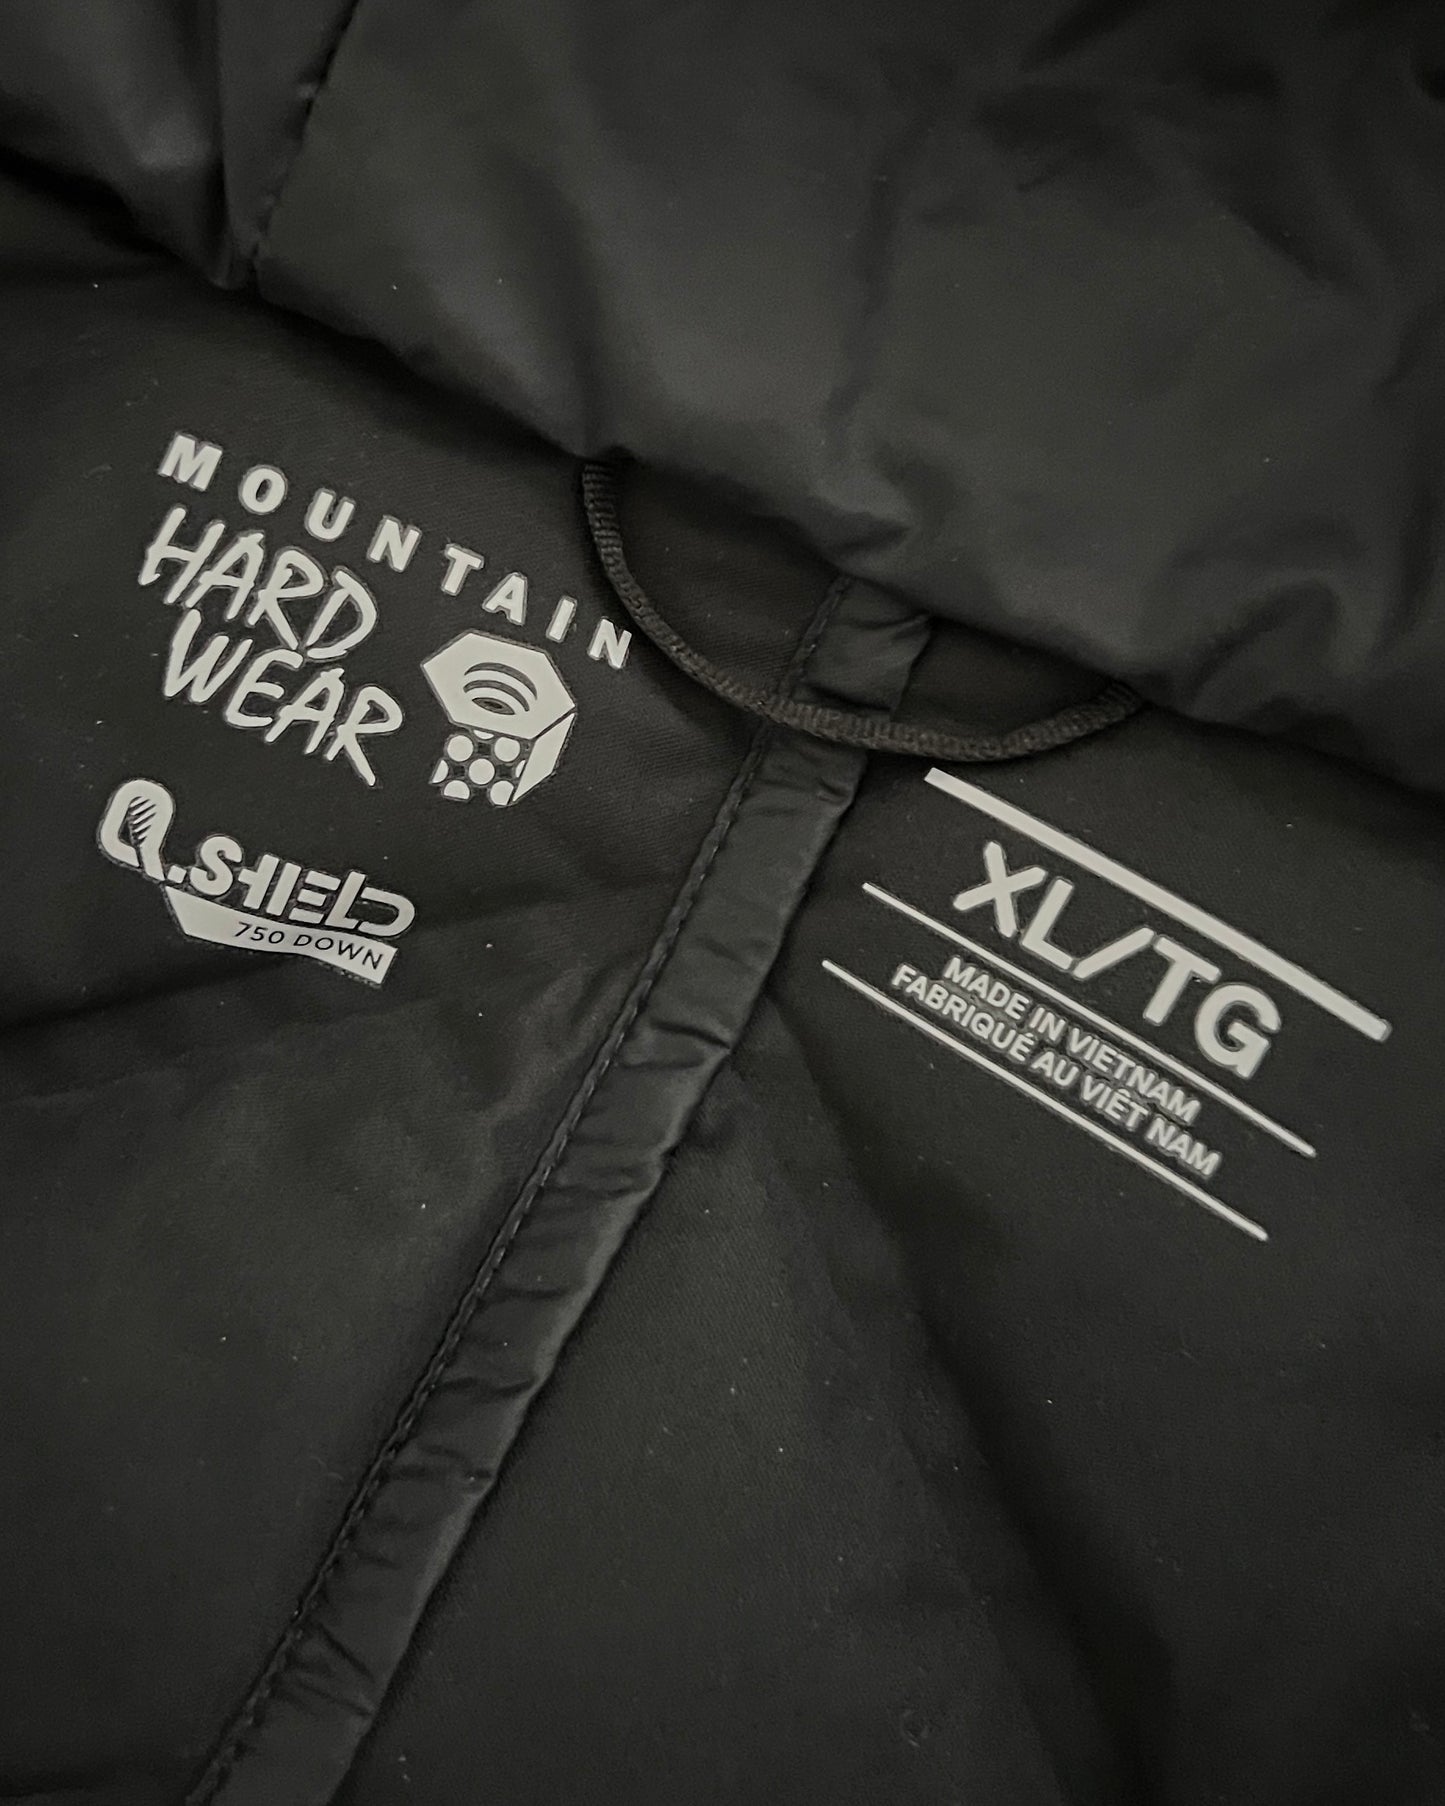 Mountain Hardwear Pertex Quantum Shield 750 Down Puffer Jacket - Size XL